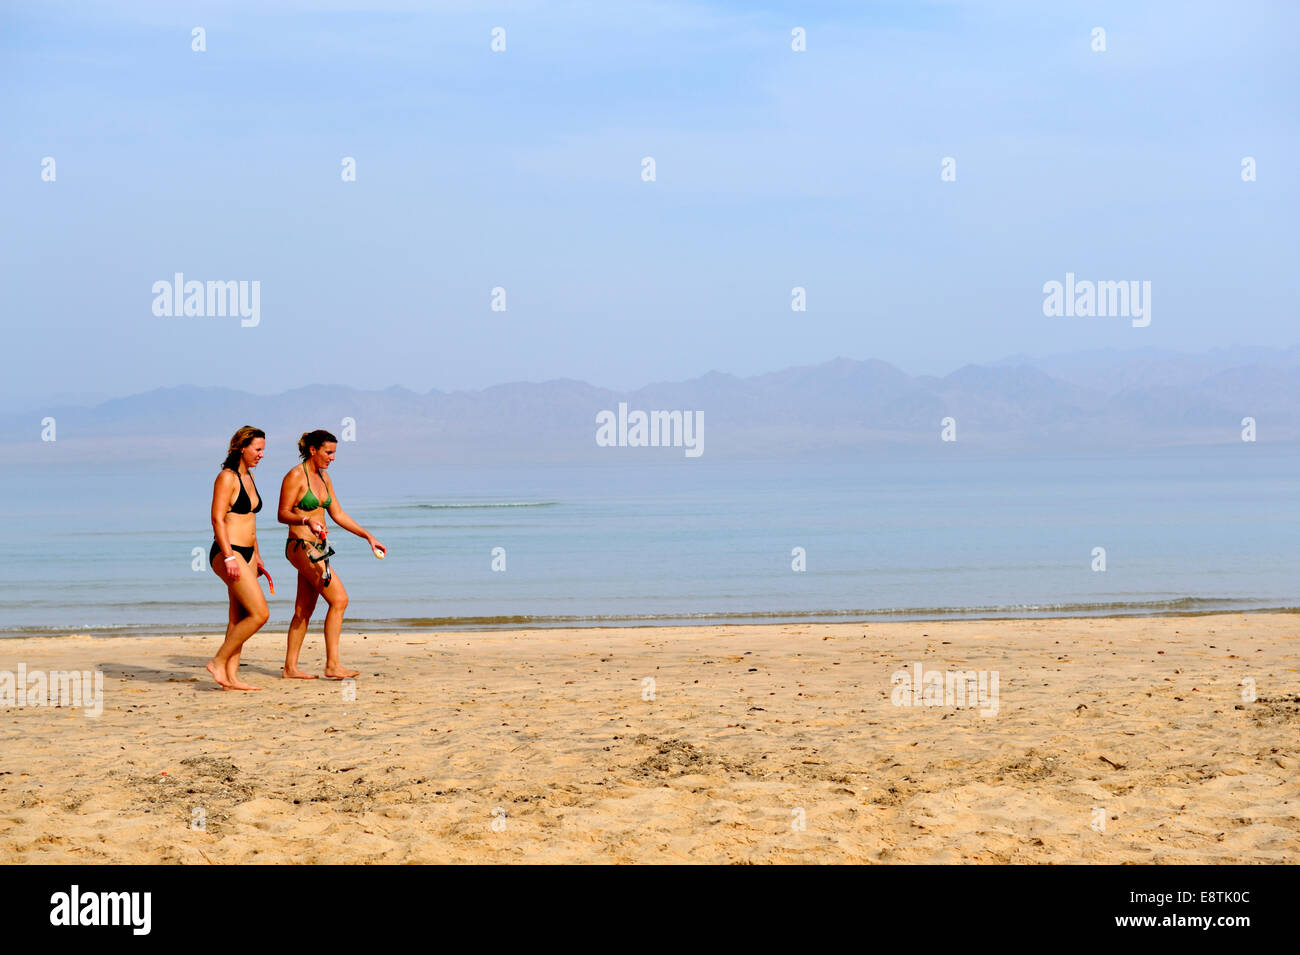 Two women walking along sandy beach at seaside Stock Photo